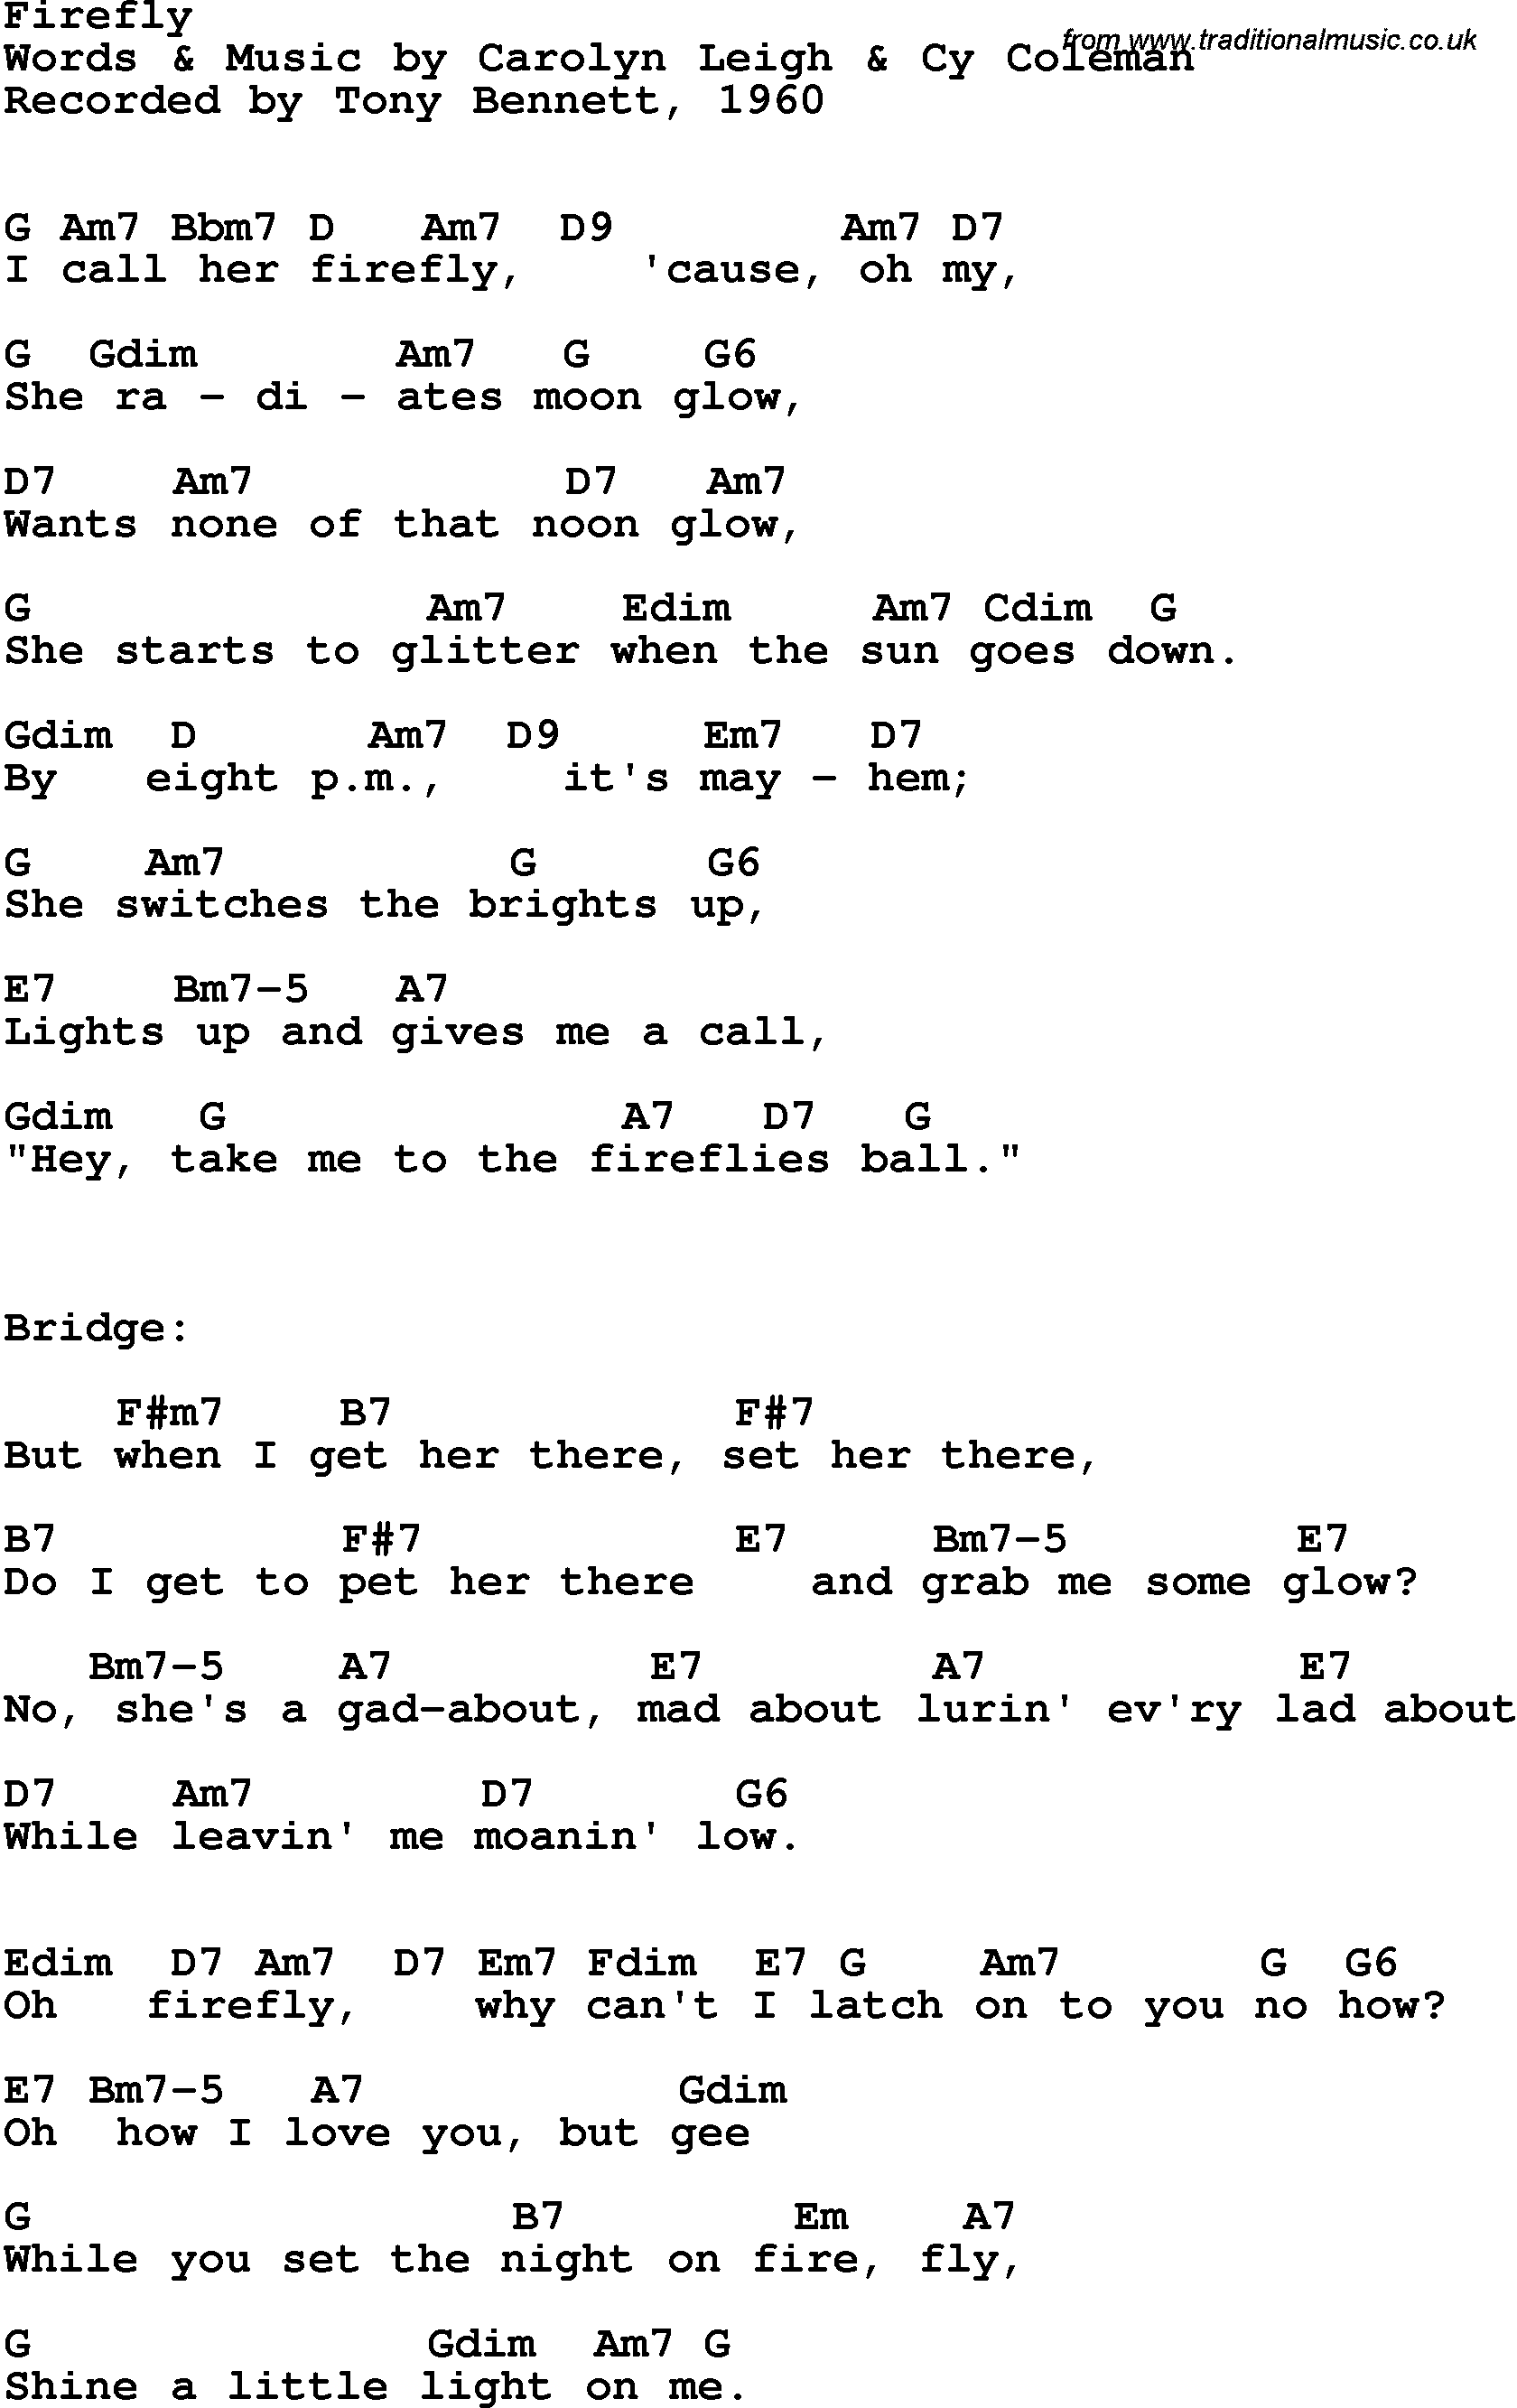 Song Lyrics with guitar chords for Firefly - Tony Bennett, 1960